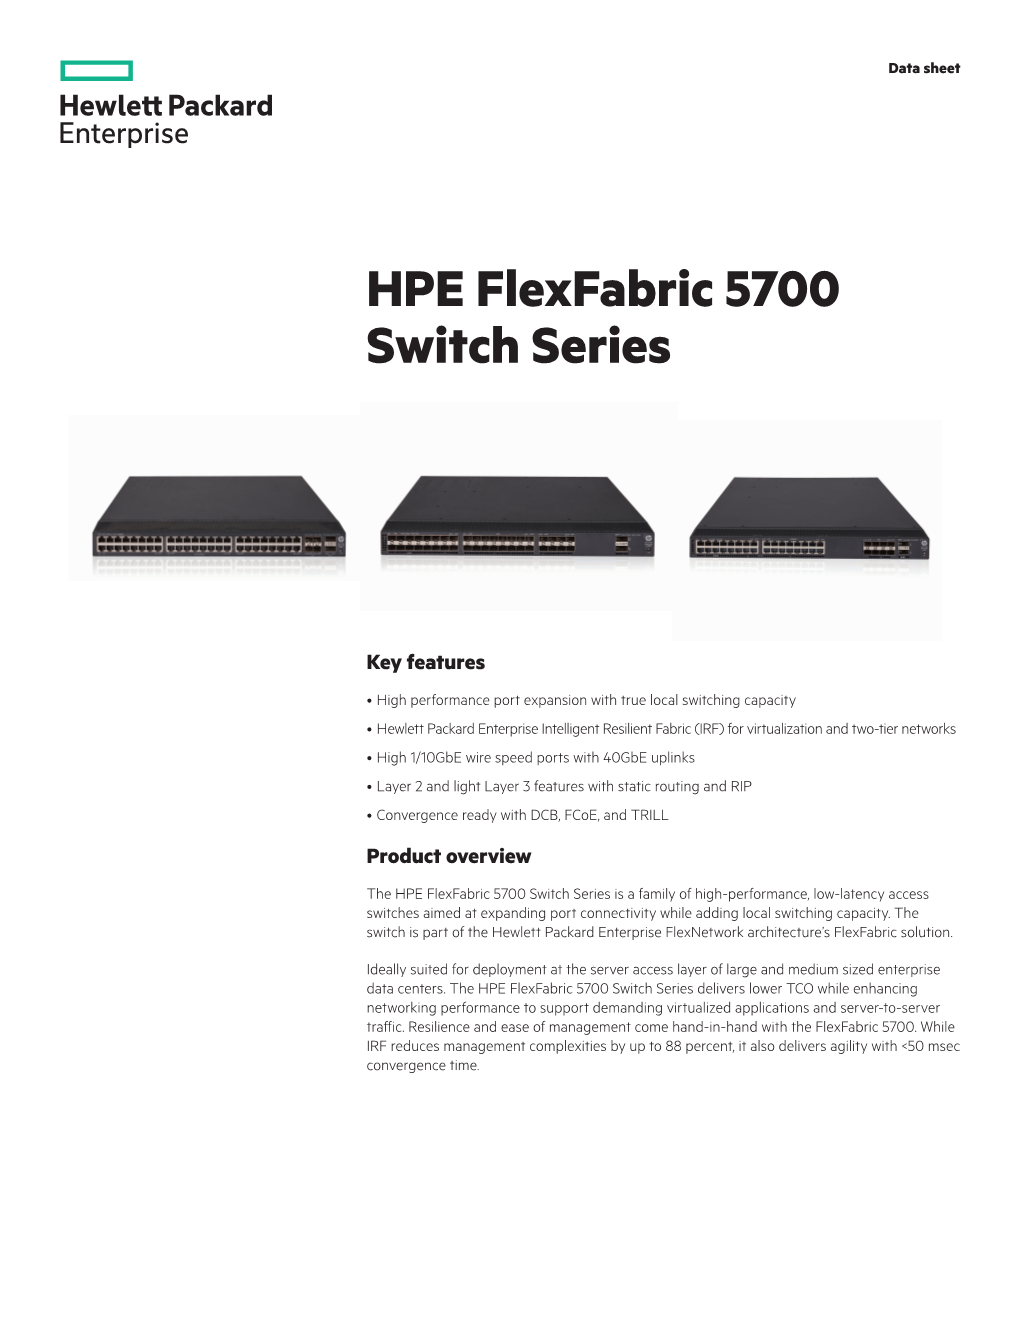 HPE Flexfabric 5700 Switch Series Data Sheet